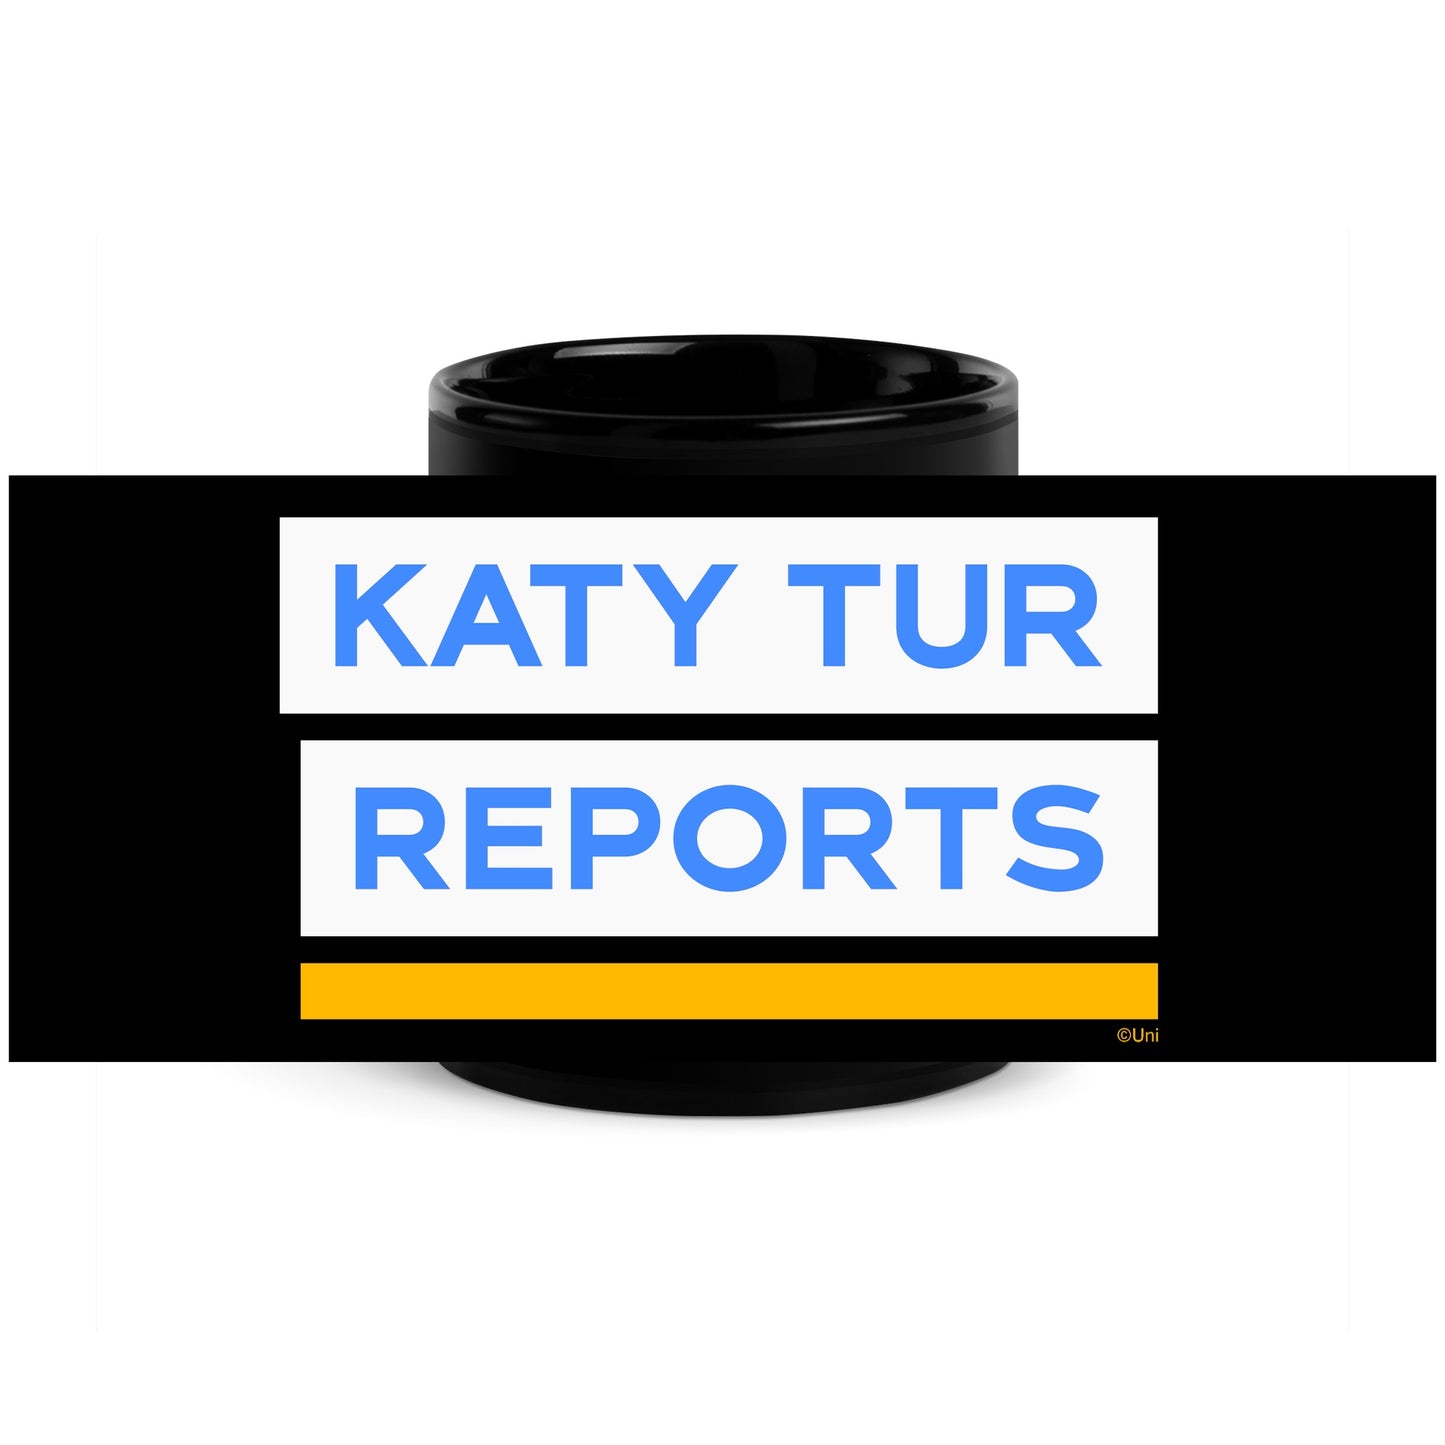 Katy Tur Reports Black Mug